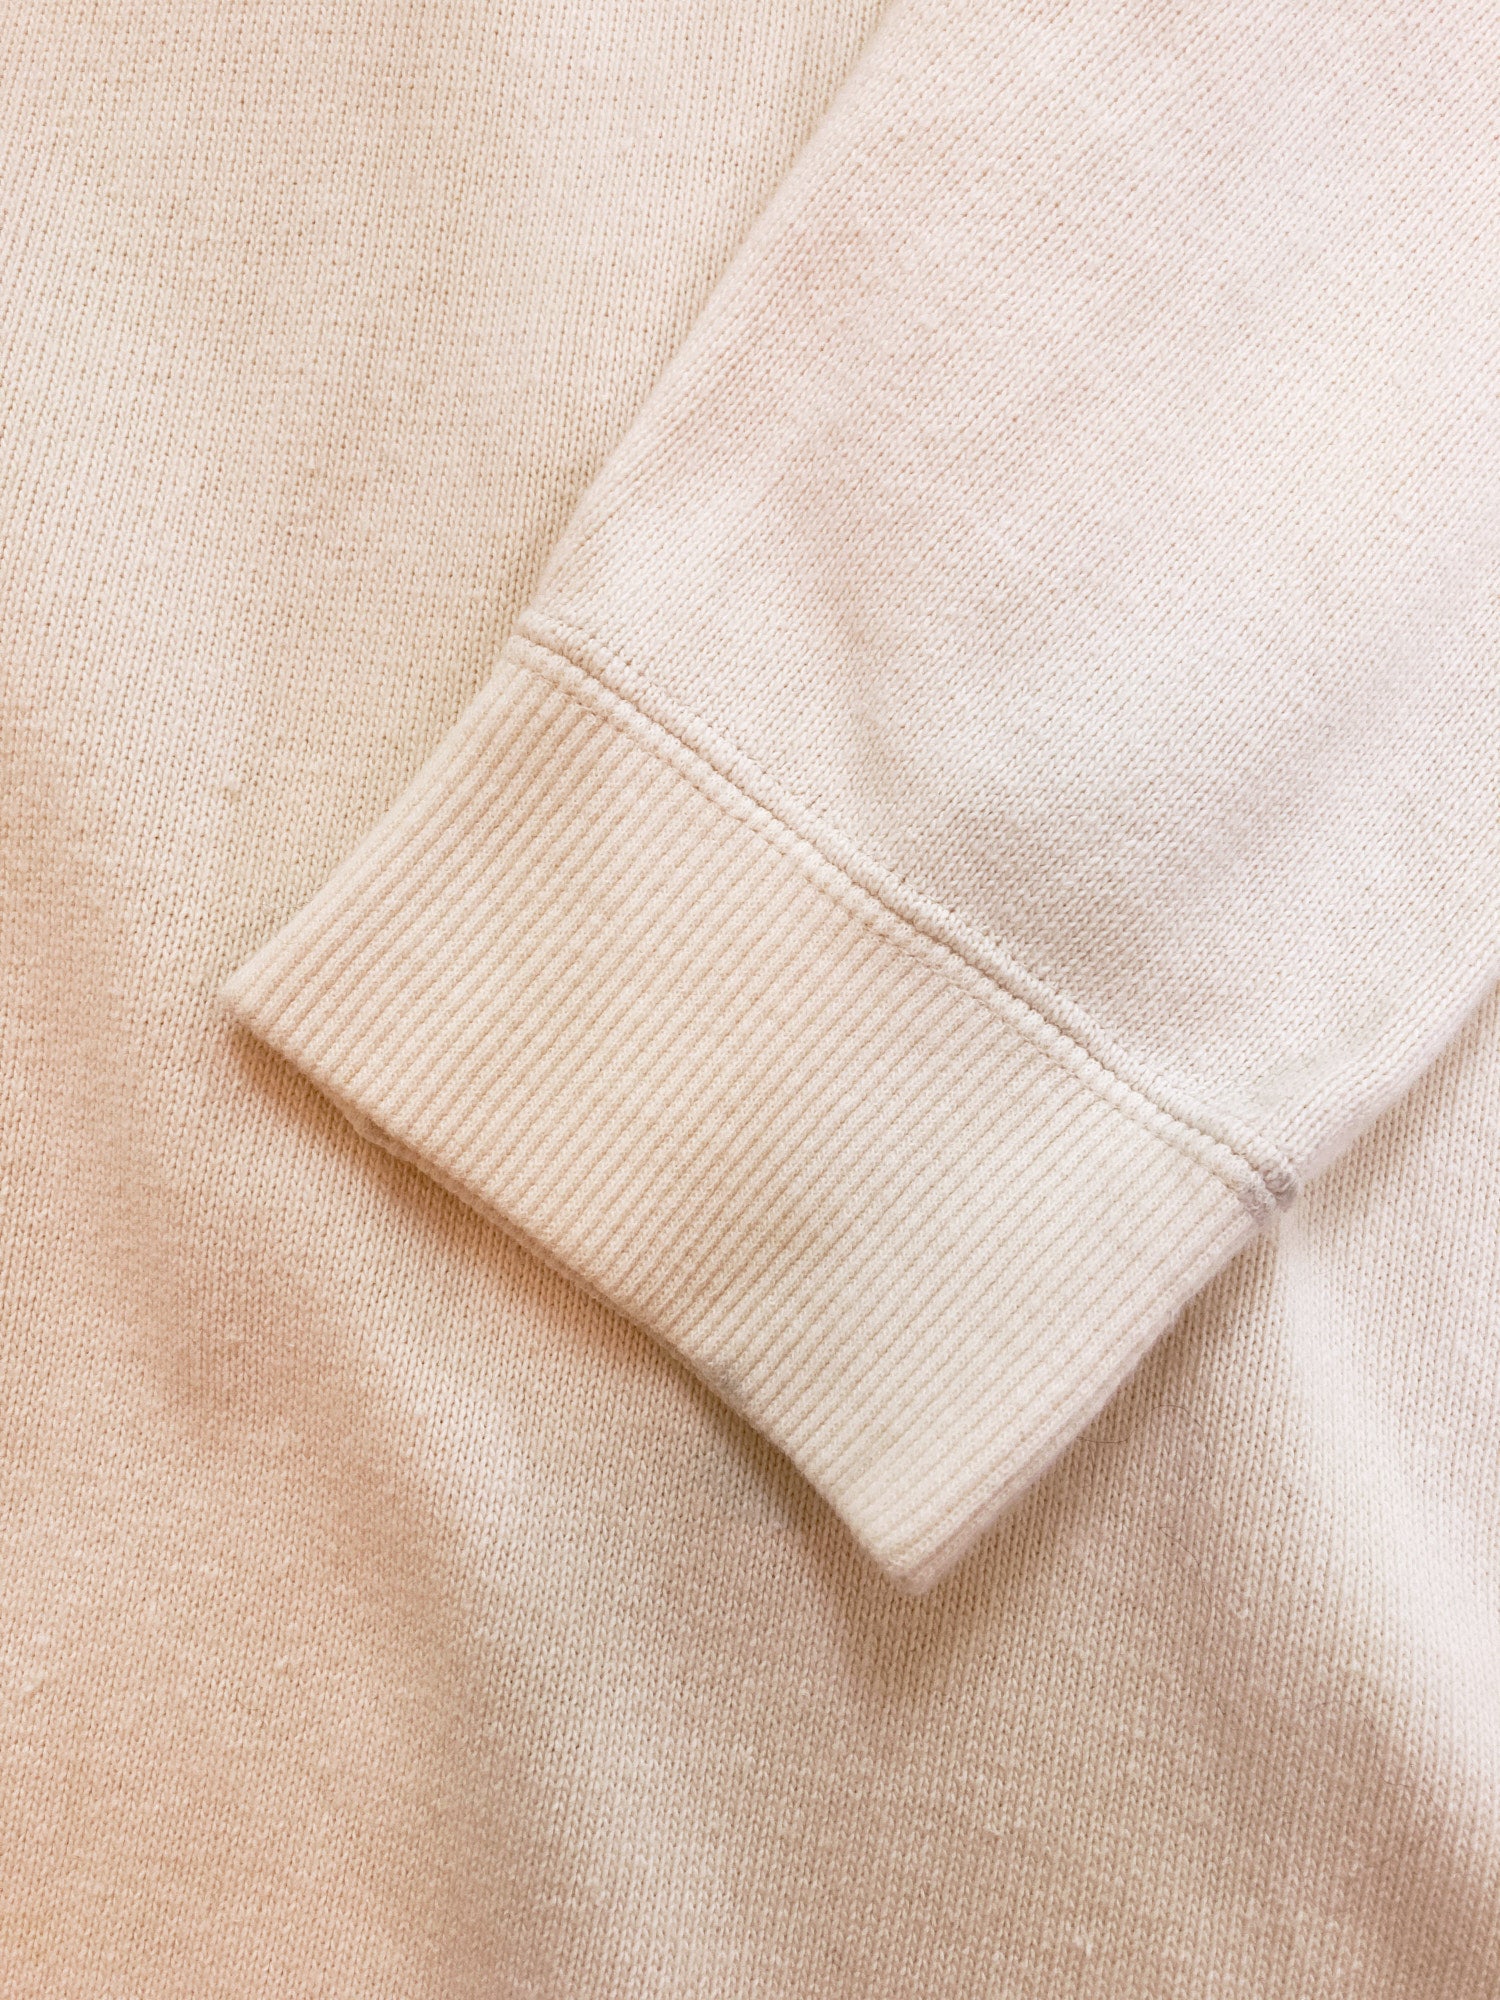 Keita Maruyama beige cotton full length hoodie dress with bowling pin motif - M